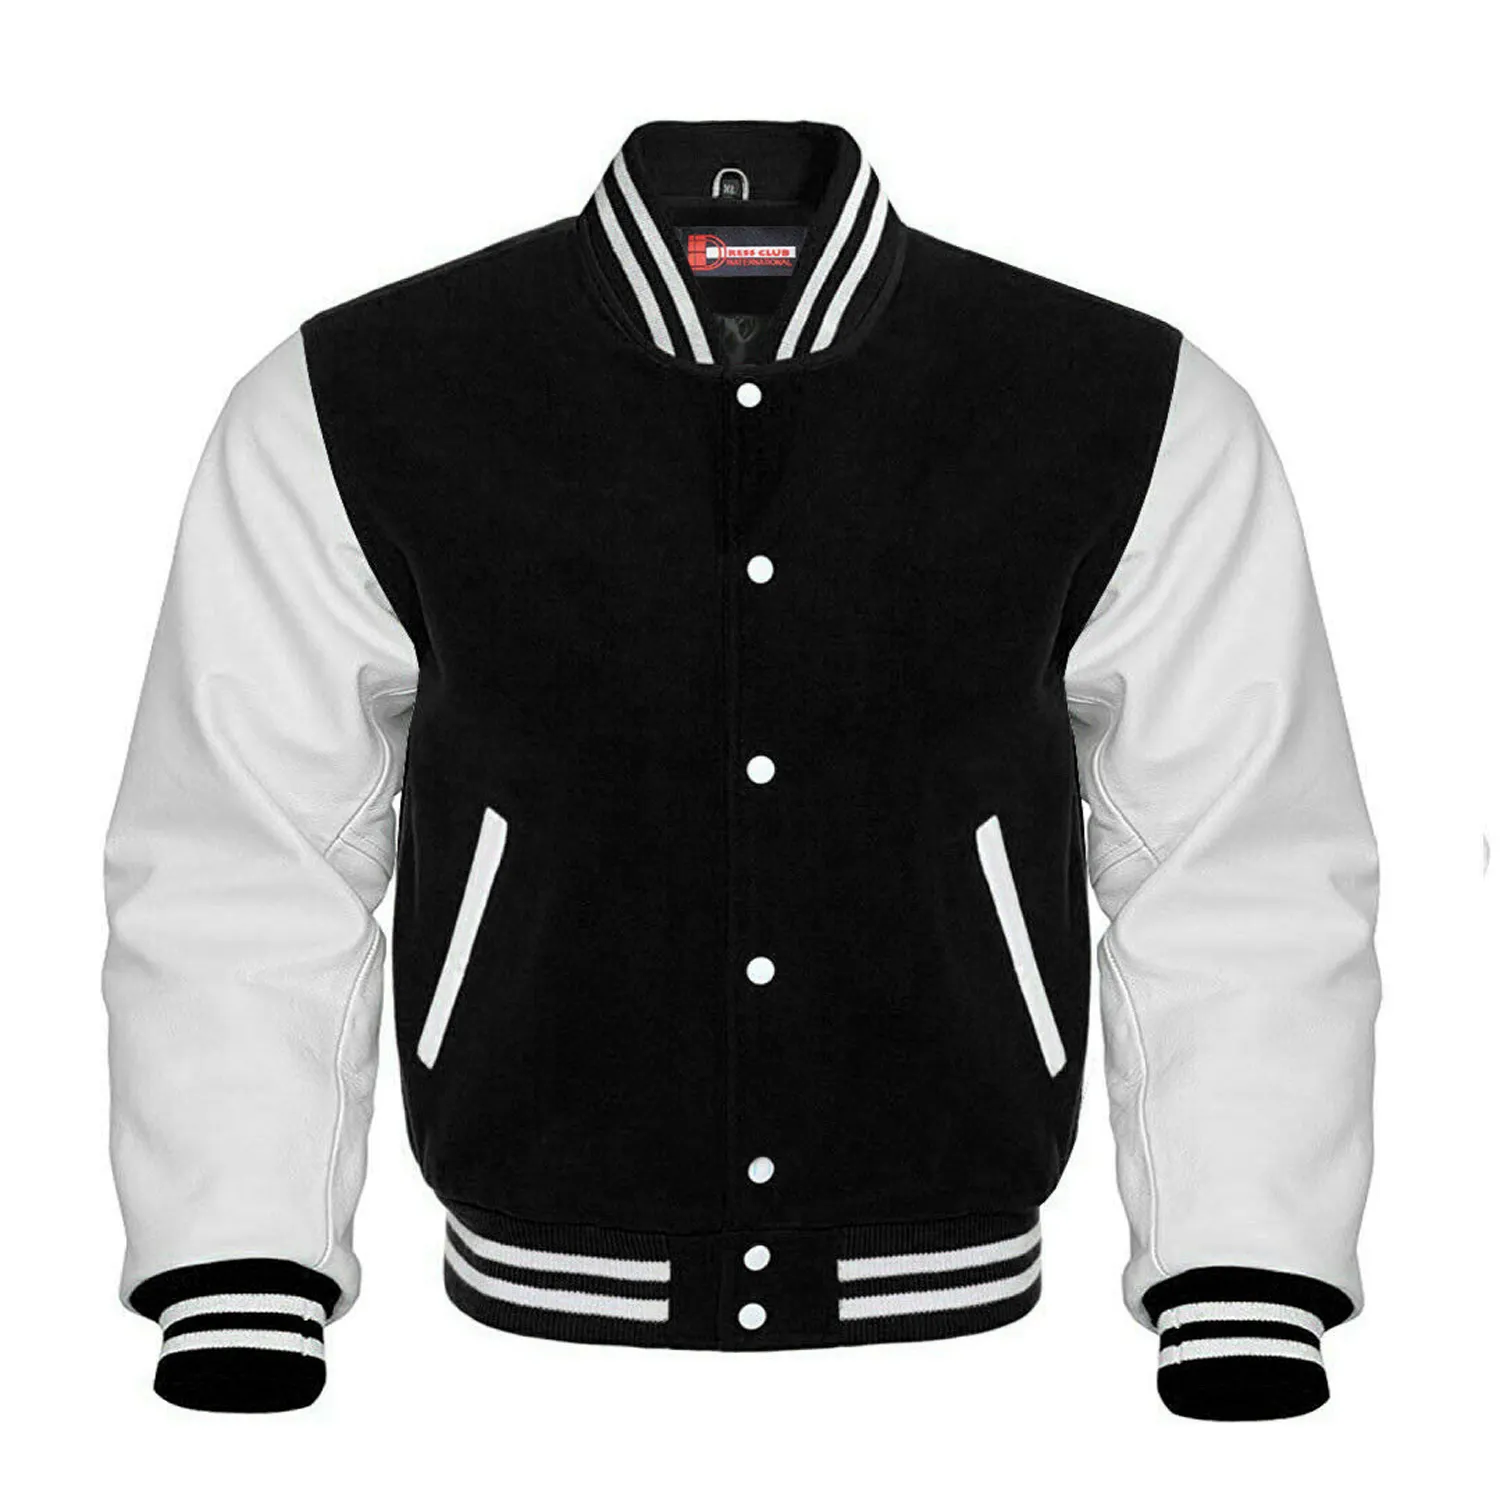 Boa Qualidade OEM Atacado Hot Bomber Jacket/Super Qualidade Custom Black Wool & Branco Real Couro Collar Varsity Jacket